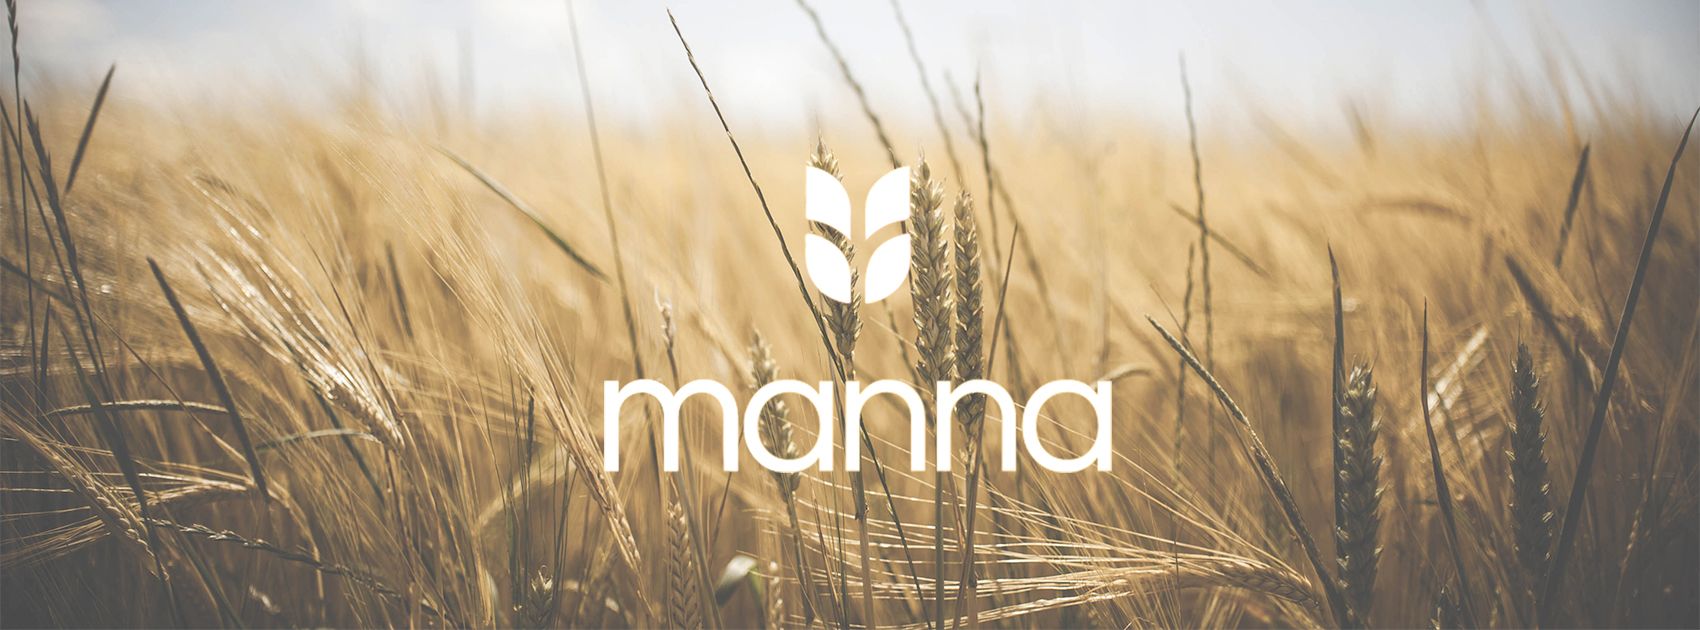 manna-banner-new.jpg